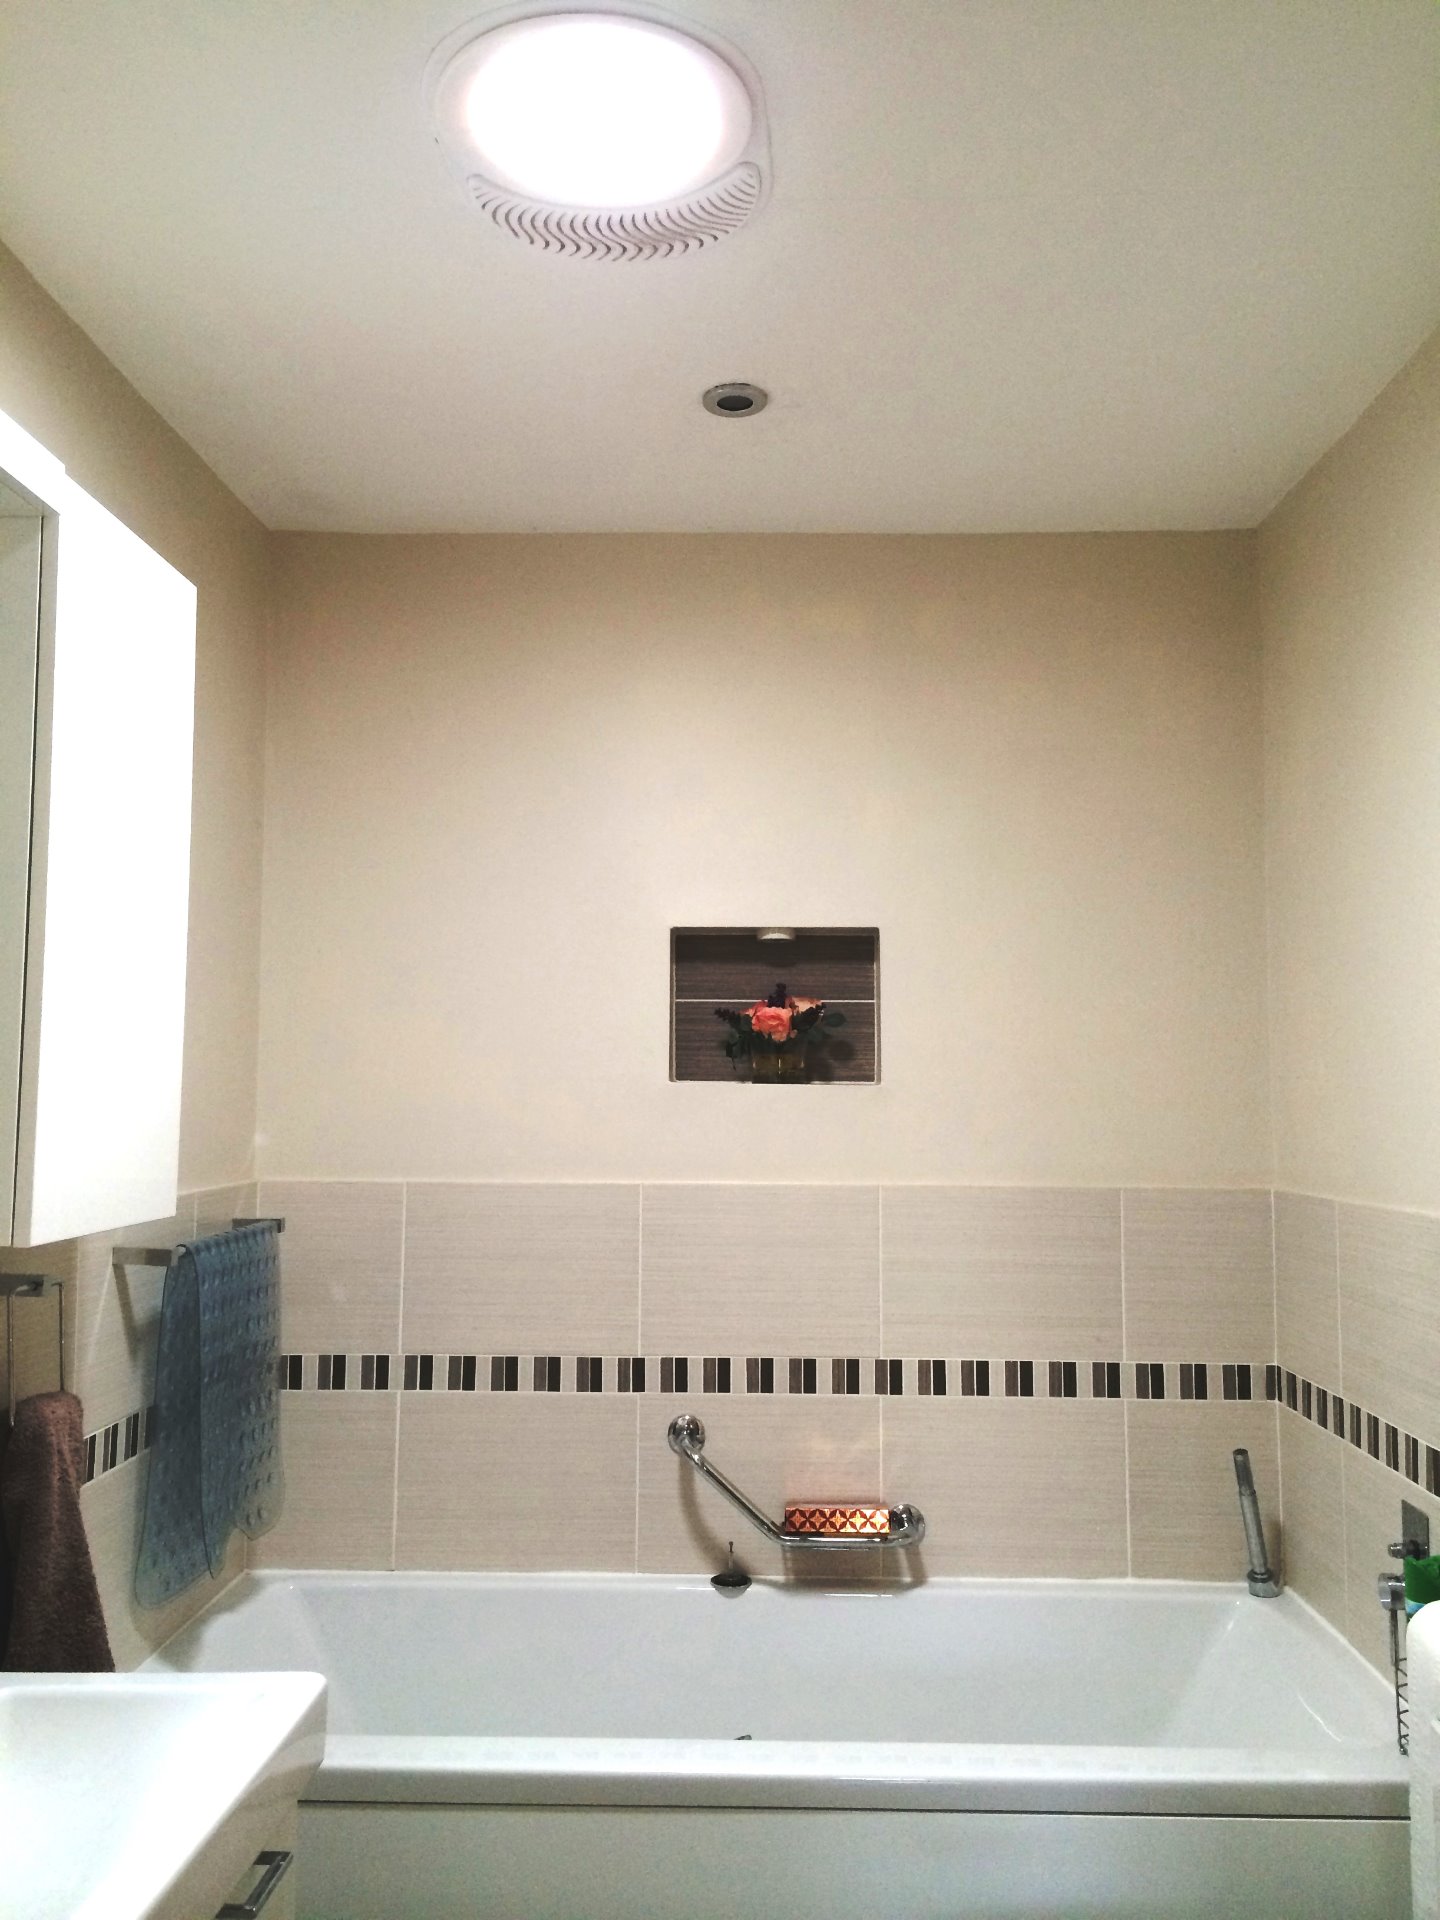 Bathroom example with ventilation kit